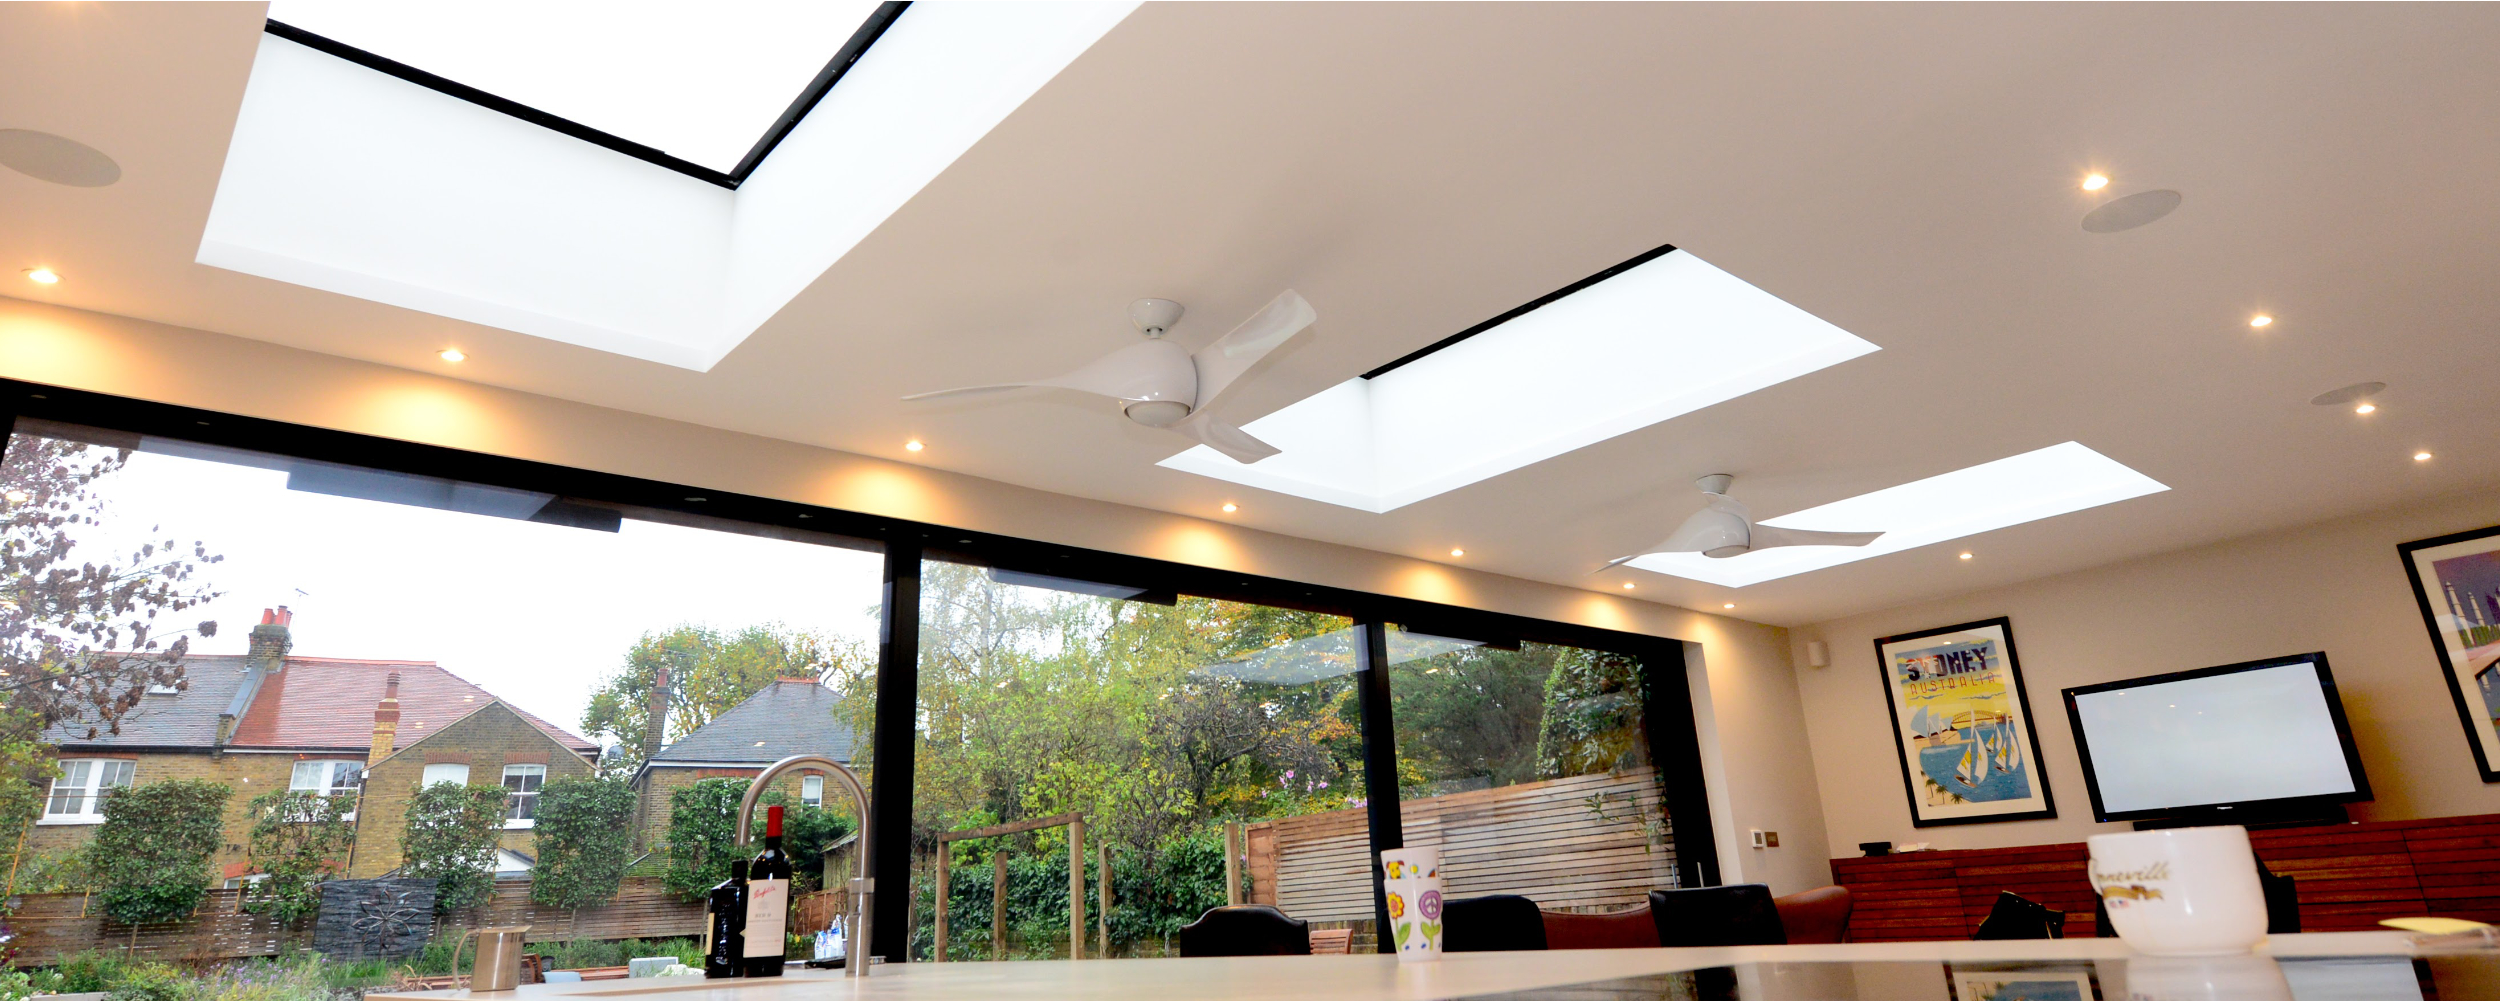 Stunning roof light installation by IDSystems